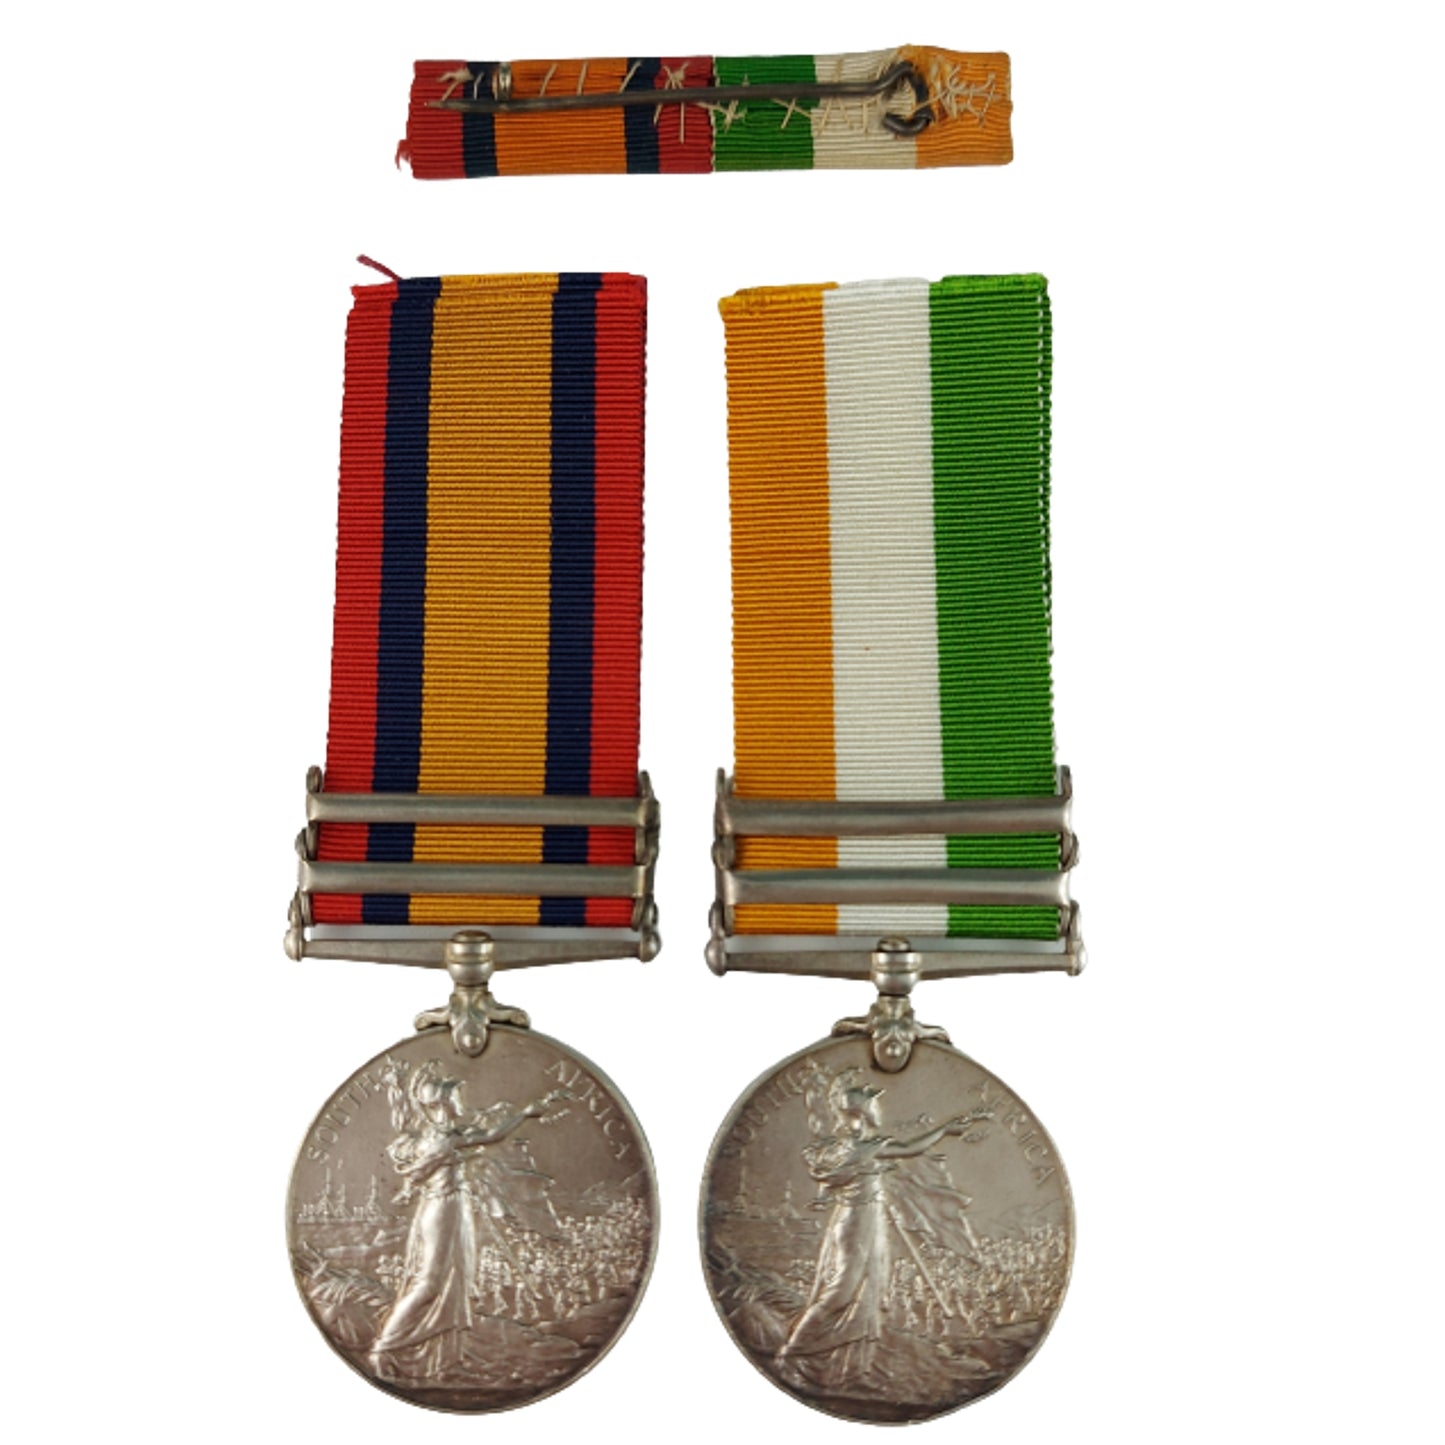 Pre-WW1 KSA King's South Africa QSA Queen's South Africa Medal Pair